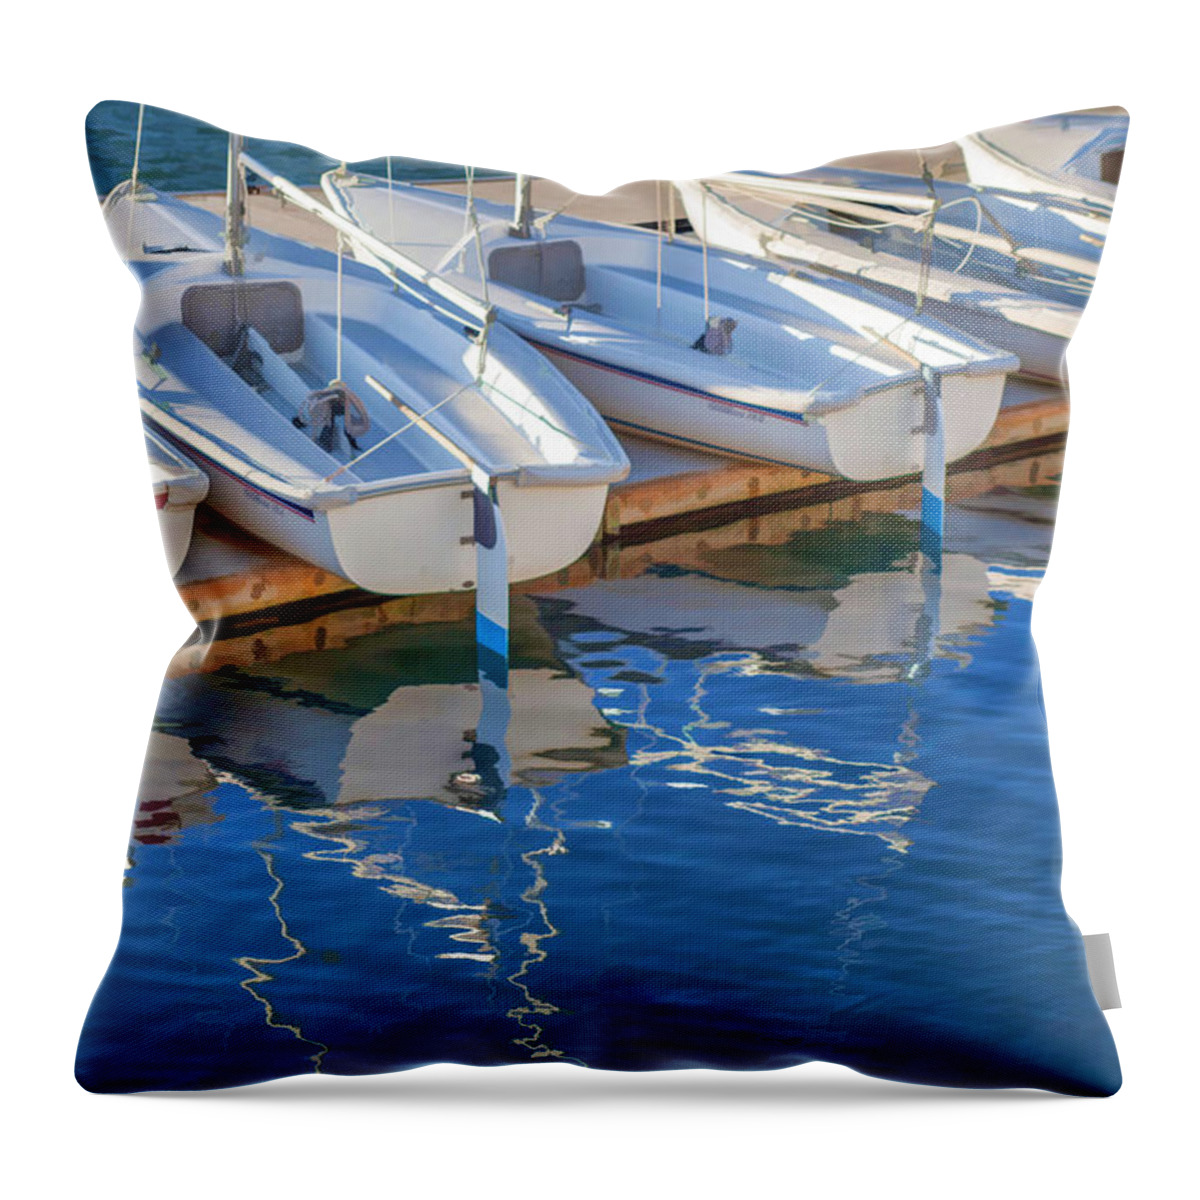 Boats Throw Pillow featuring the digital art Sailboats and dock by Cliff Wassmann